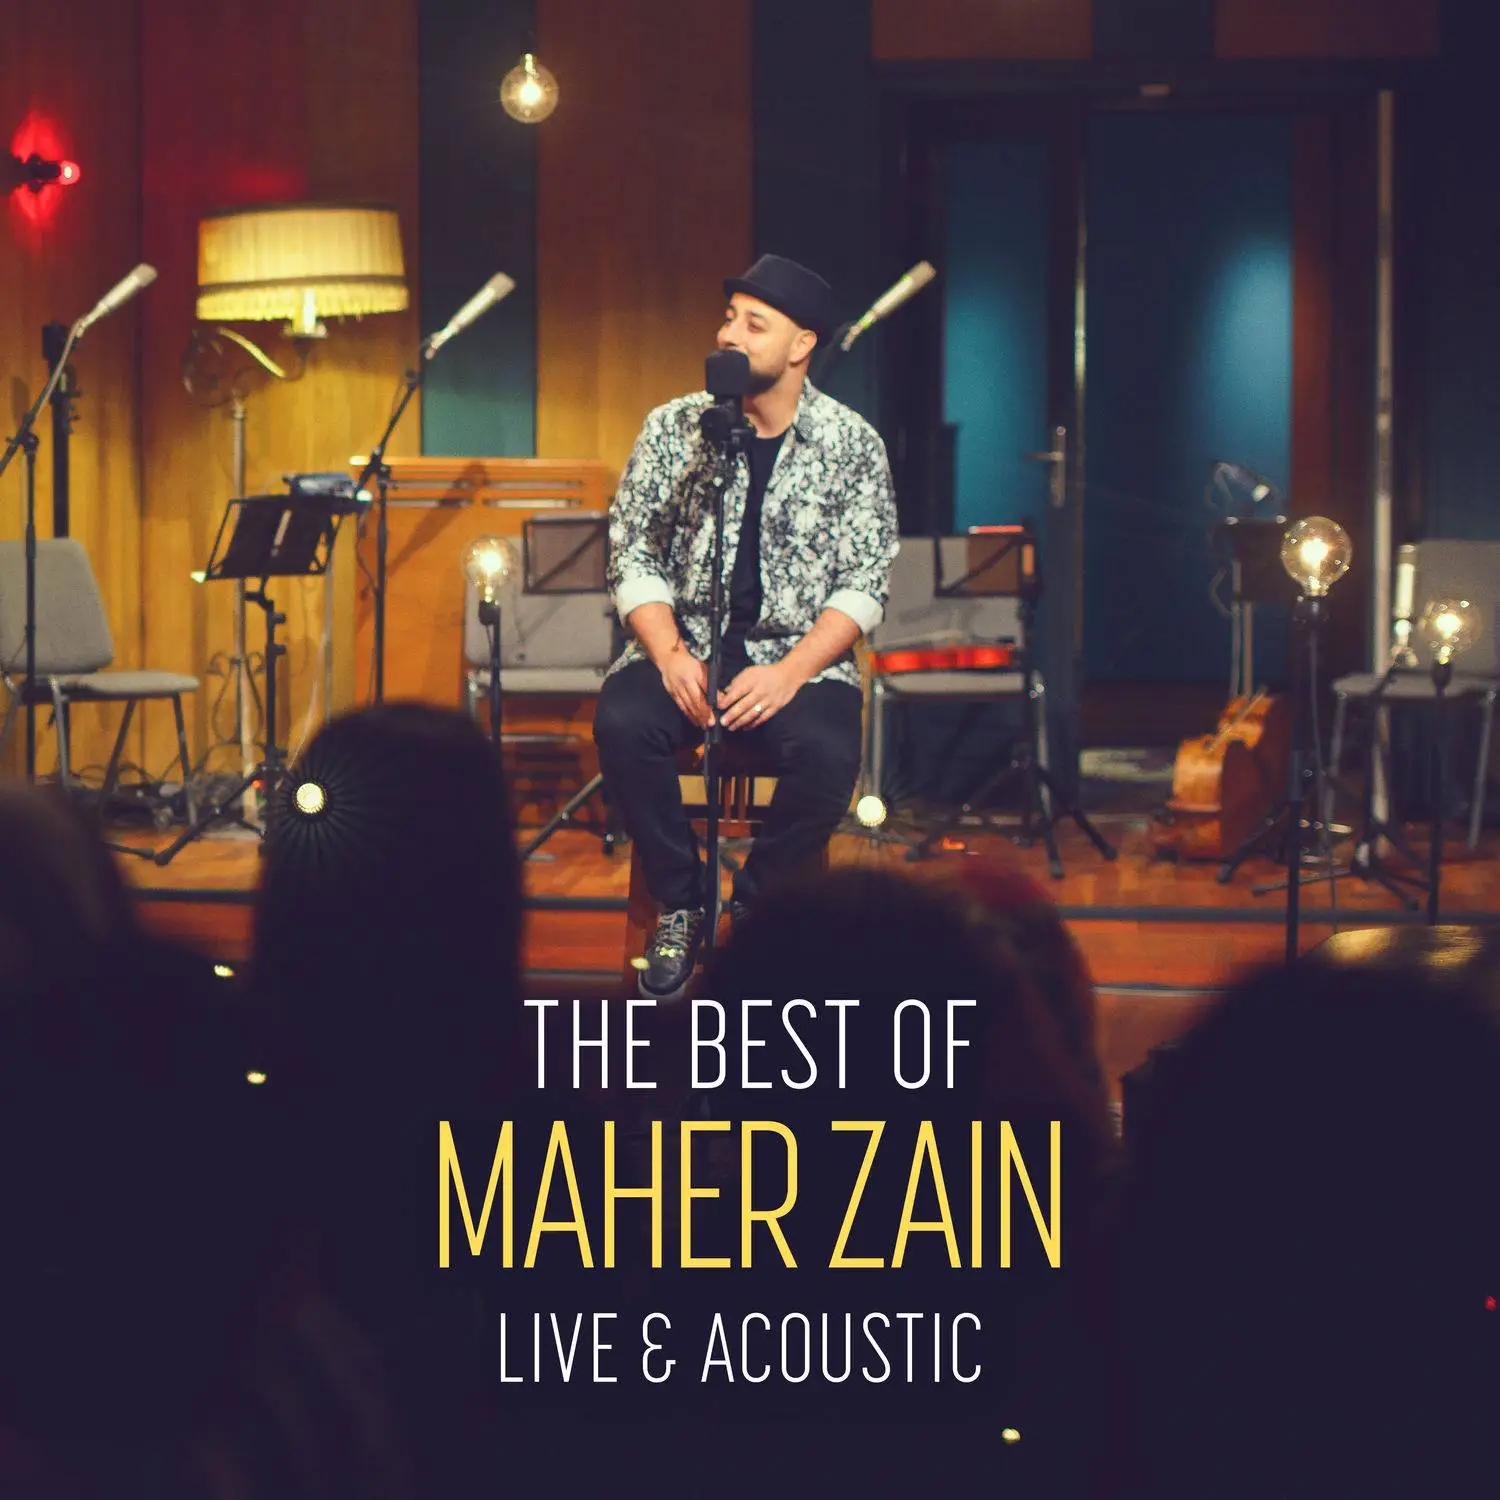 maher zain album one arabic download